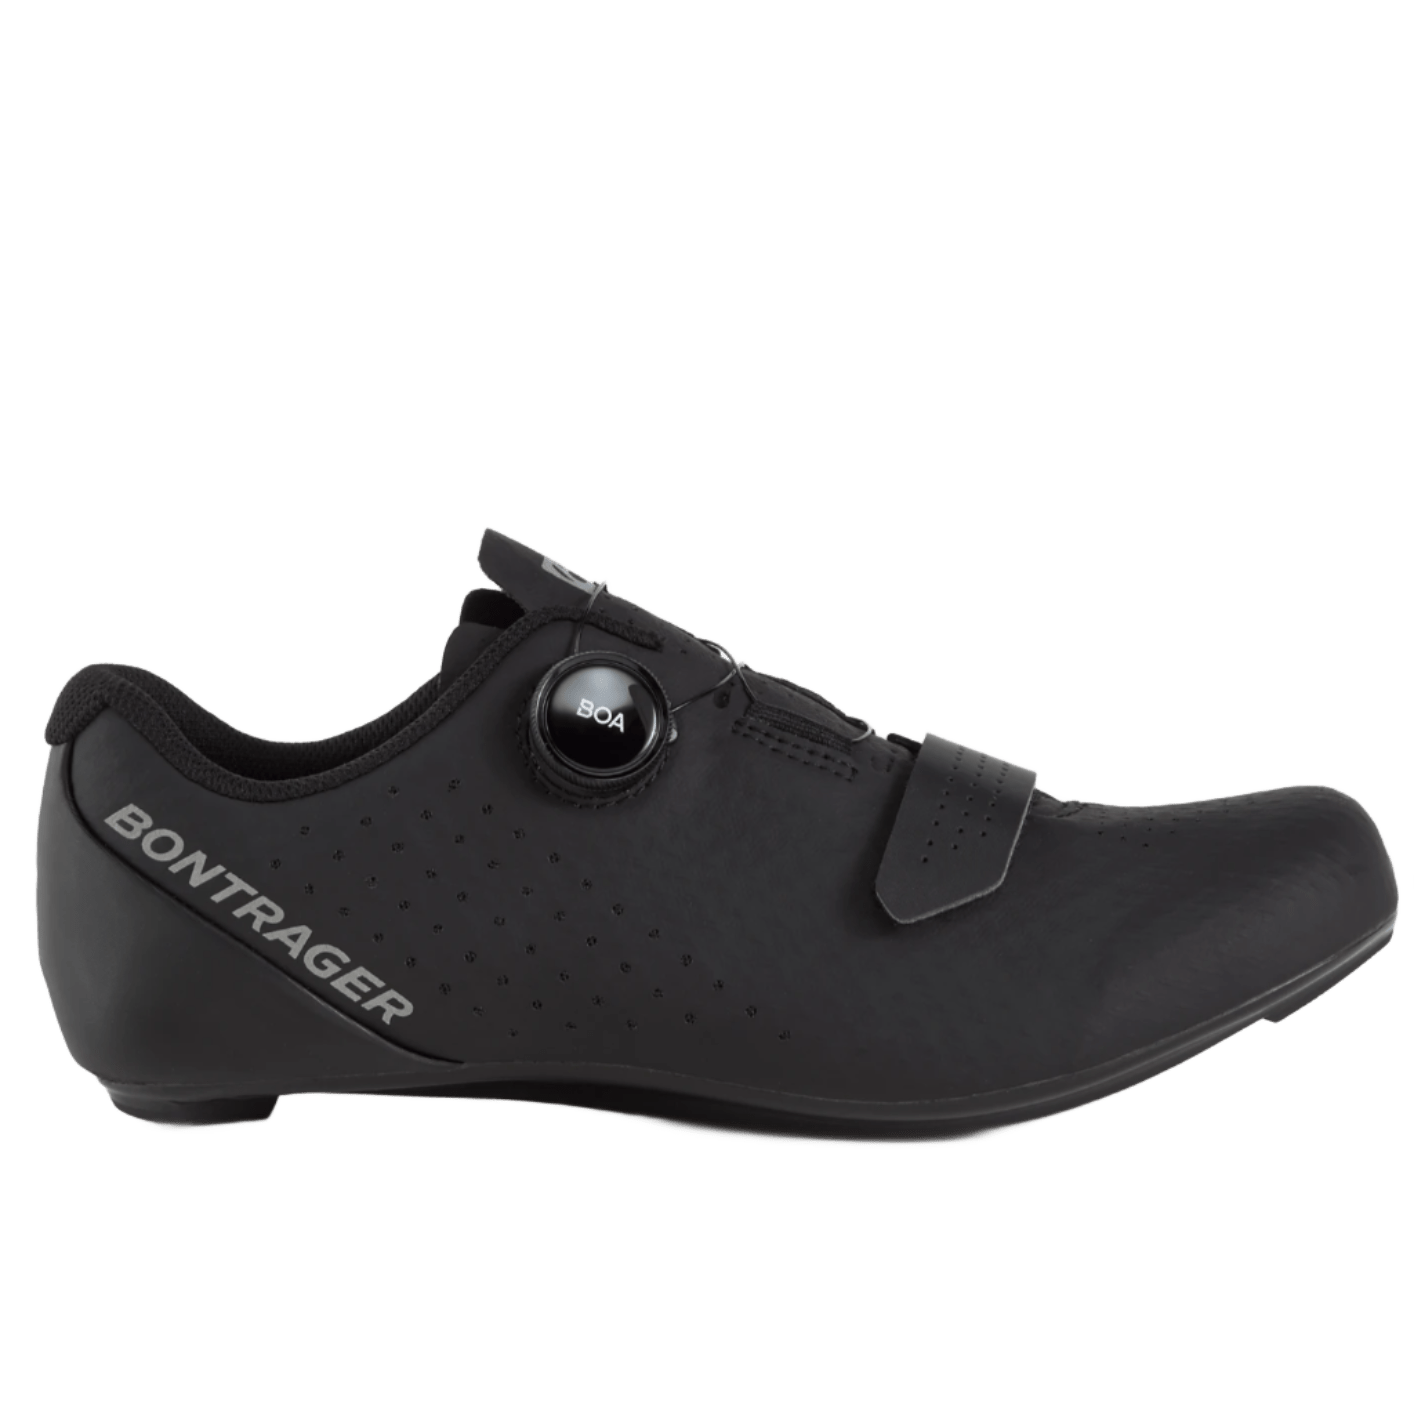 Bontrager Circuit Road Cycling Shoe Black / 37 Apparel - Apparel Accessories - Shoes - Road